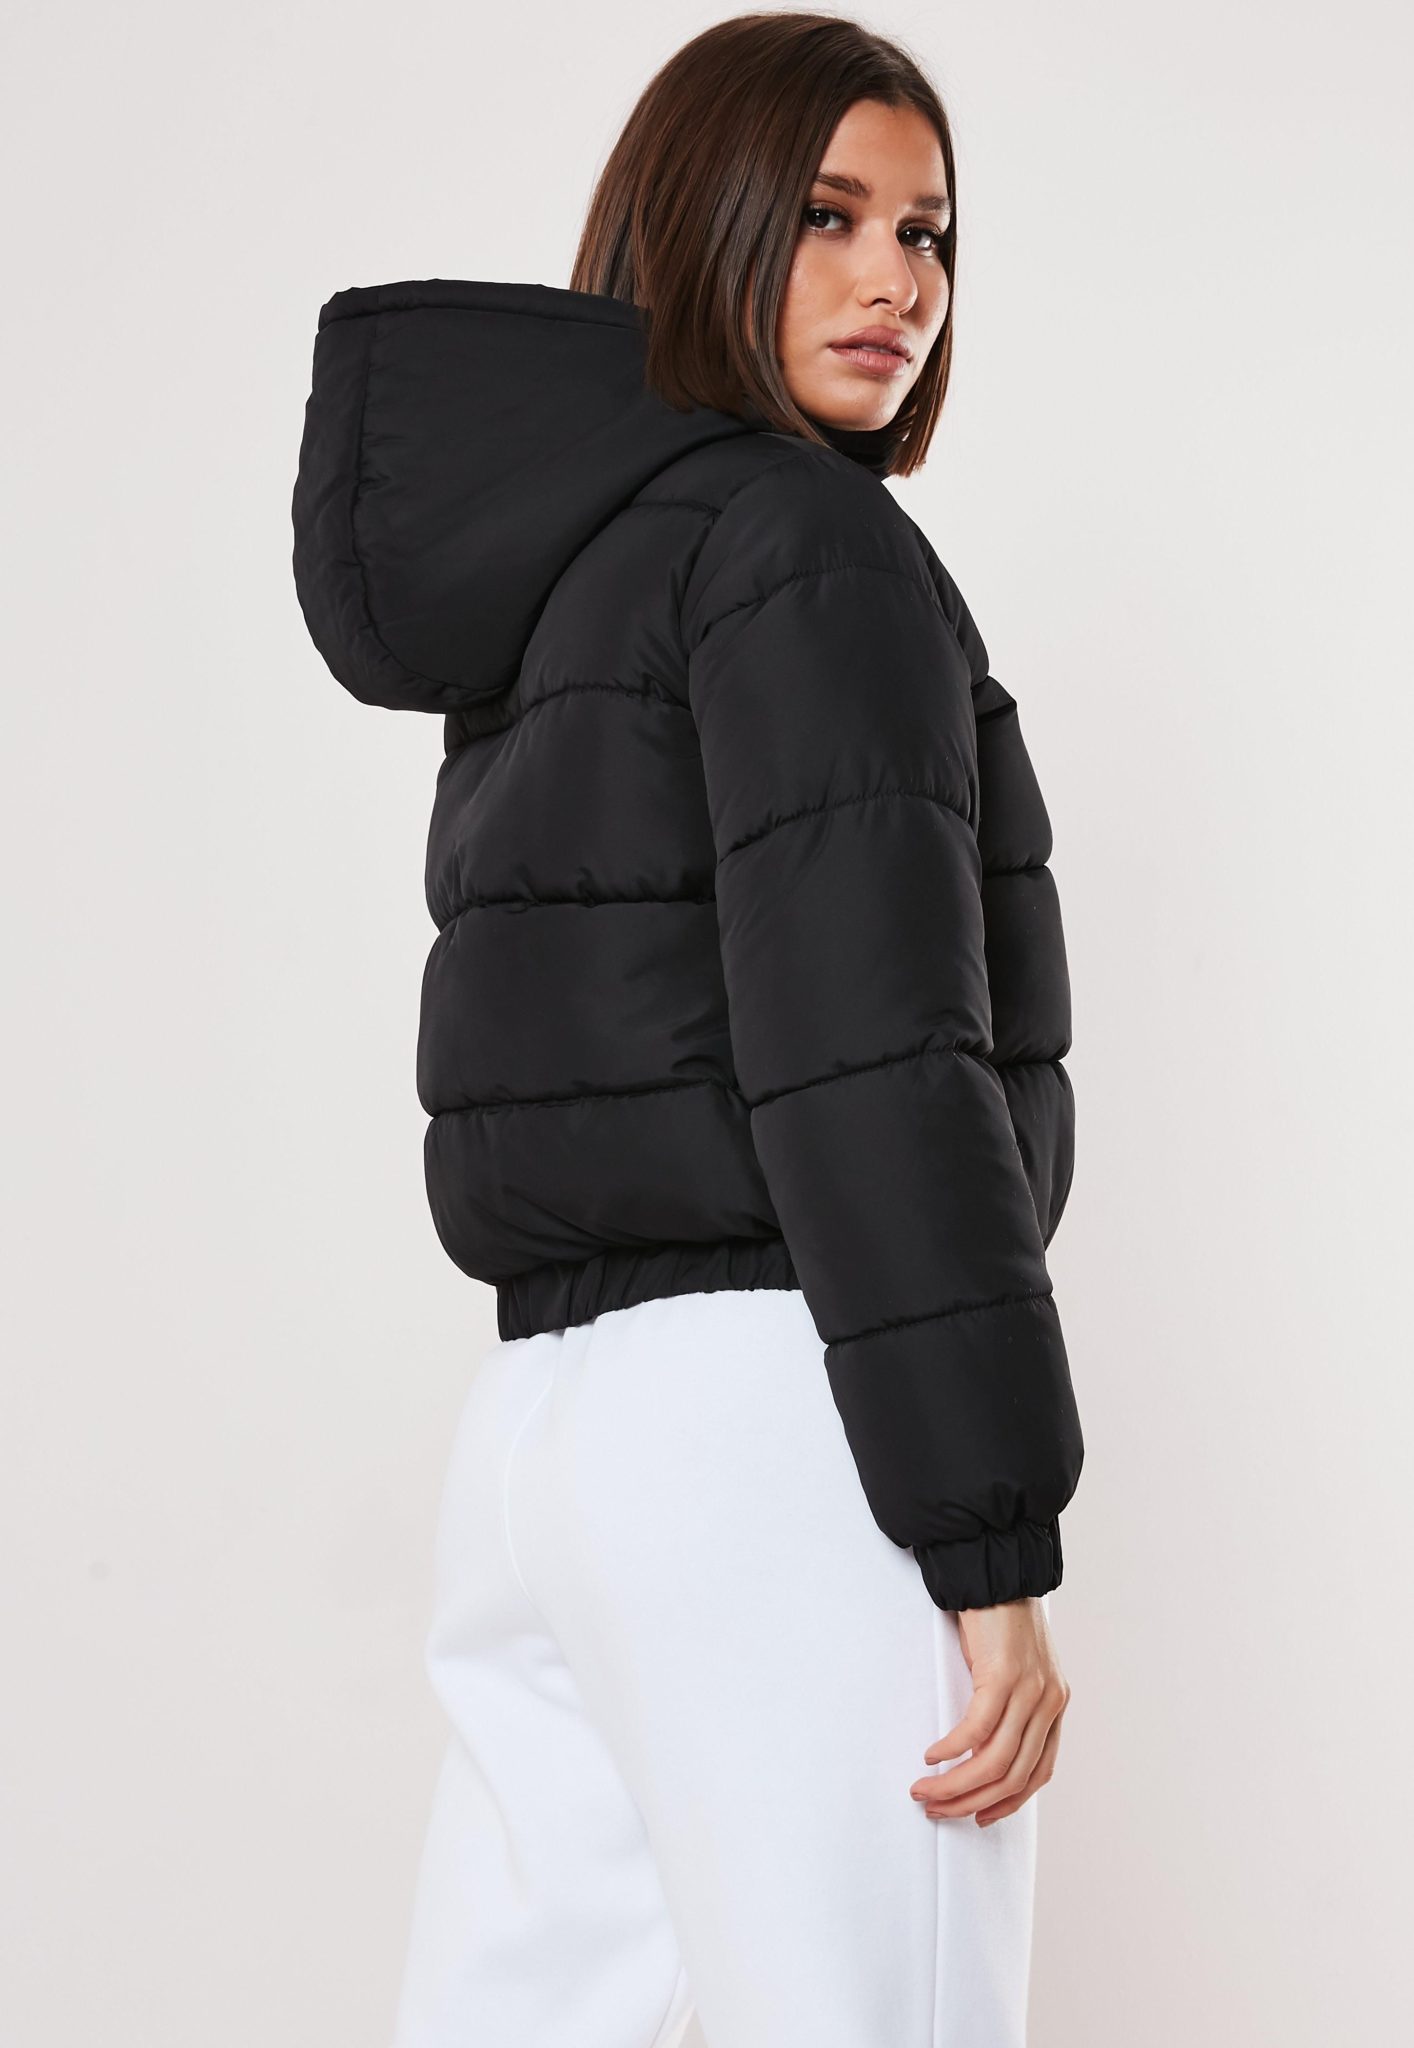 Black Puffer Jacket 1414x2048 